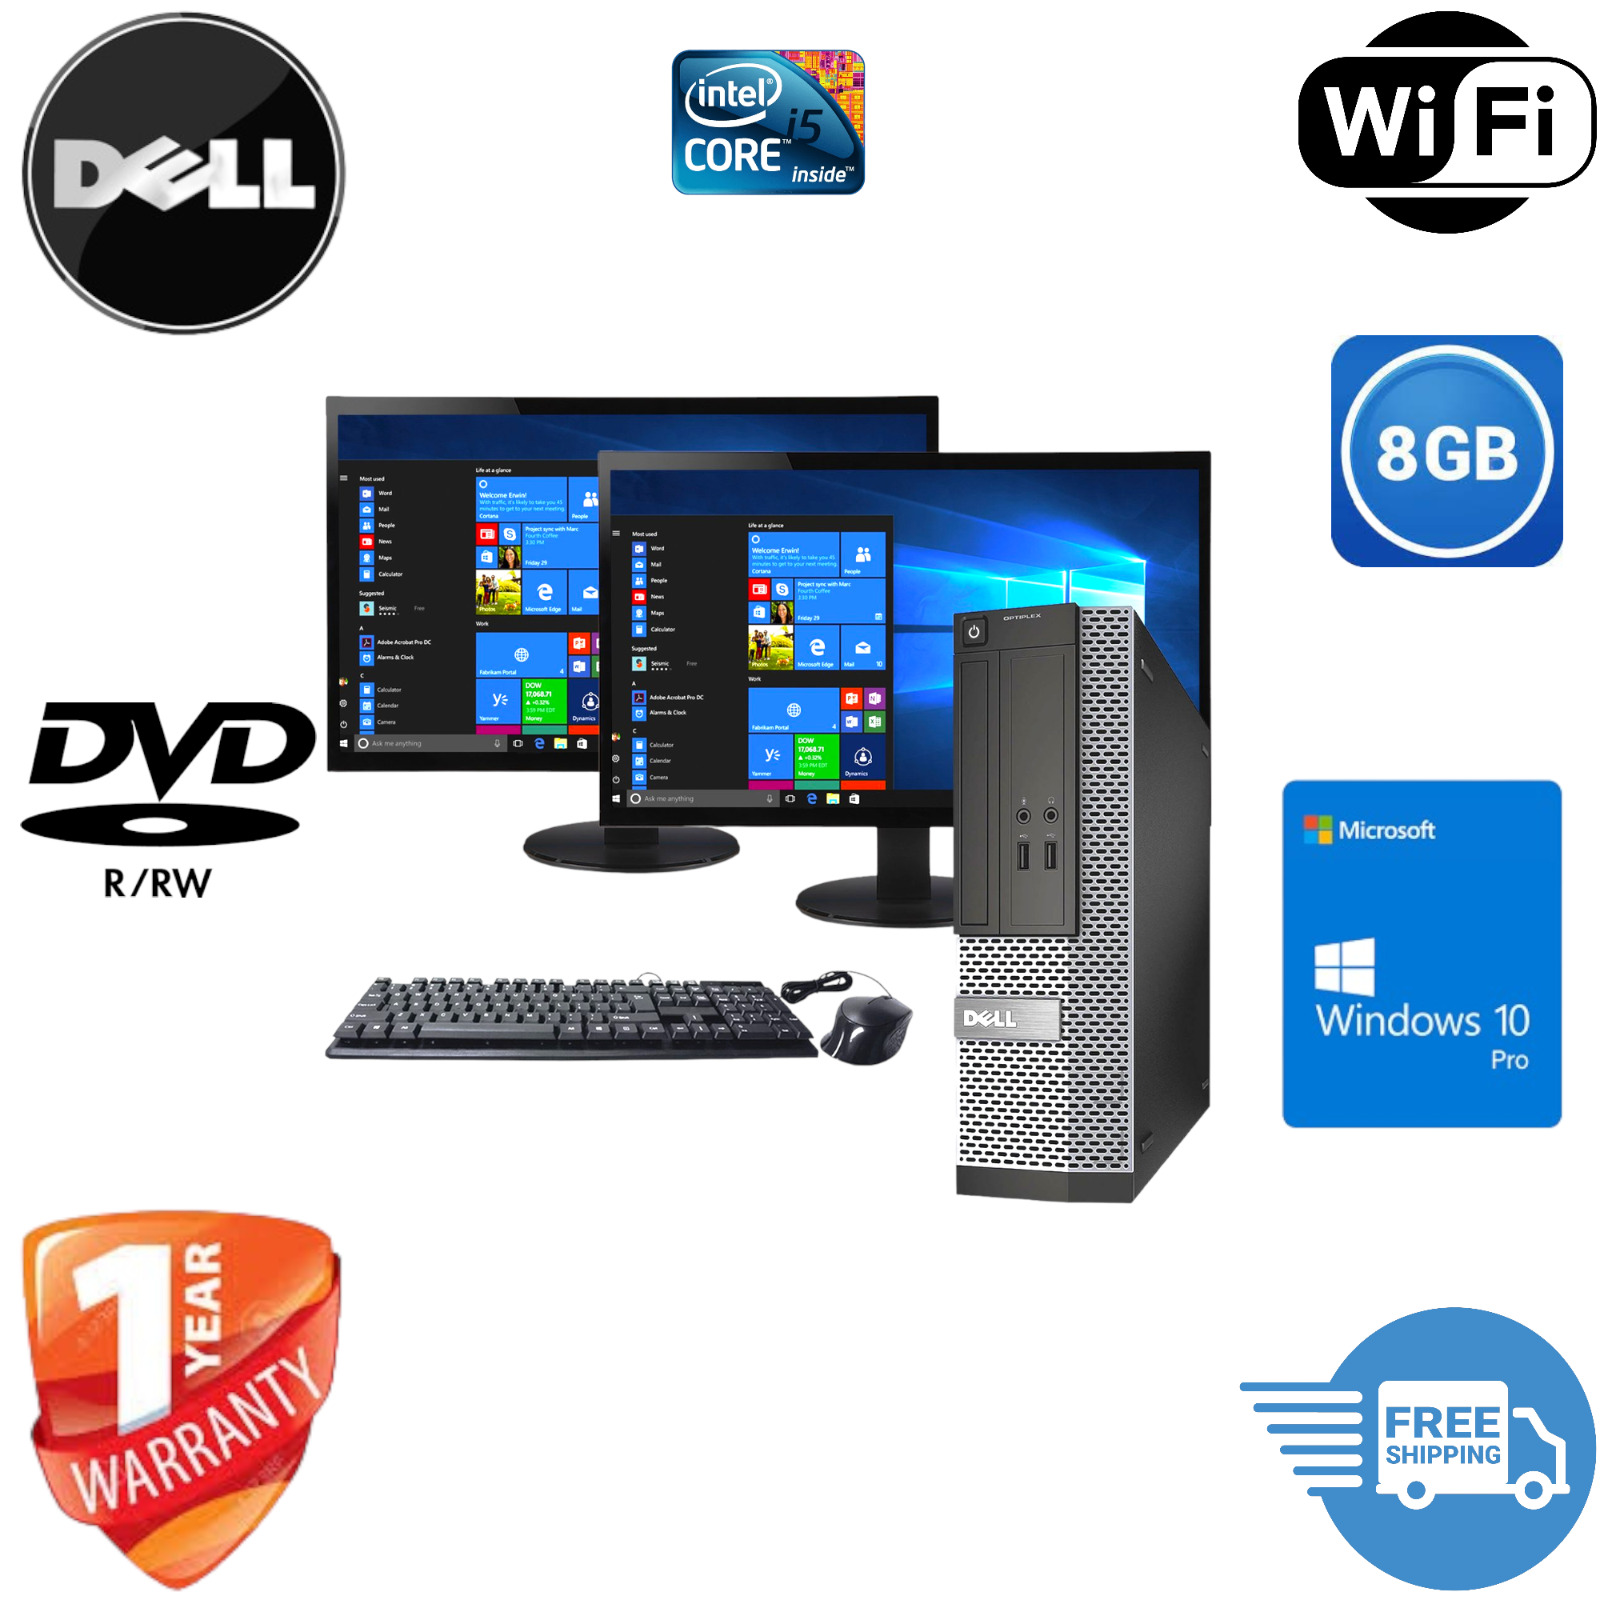 Dell Desktop Computer PC 8GB UP to  2TB HDD/SSD Windows 10 Pro Wi-Fi DVD/RW